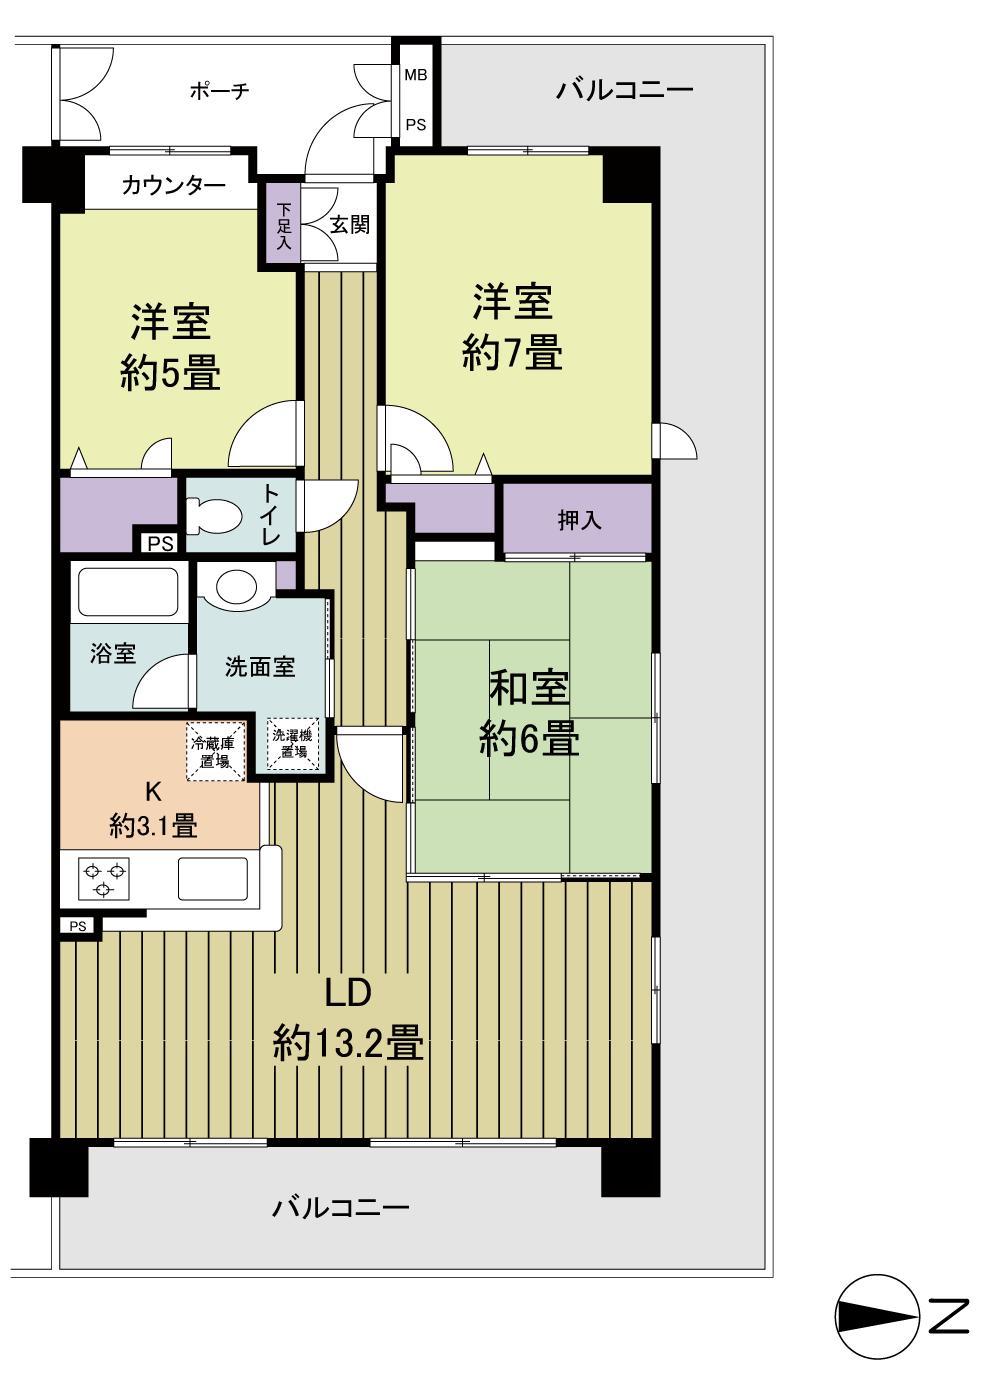 Floor plan. 3LDK, Price 24,800,000 yen, Occupied area 74.39 sq m , Balcony area 32.56 sq m